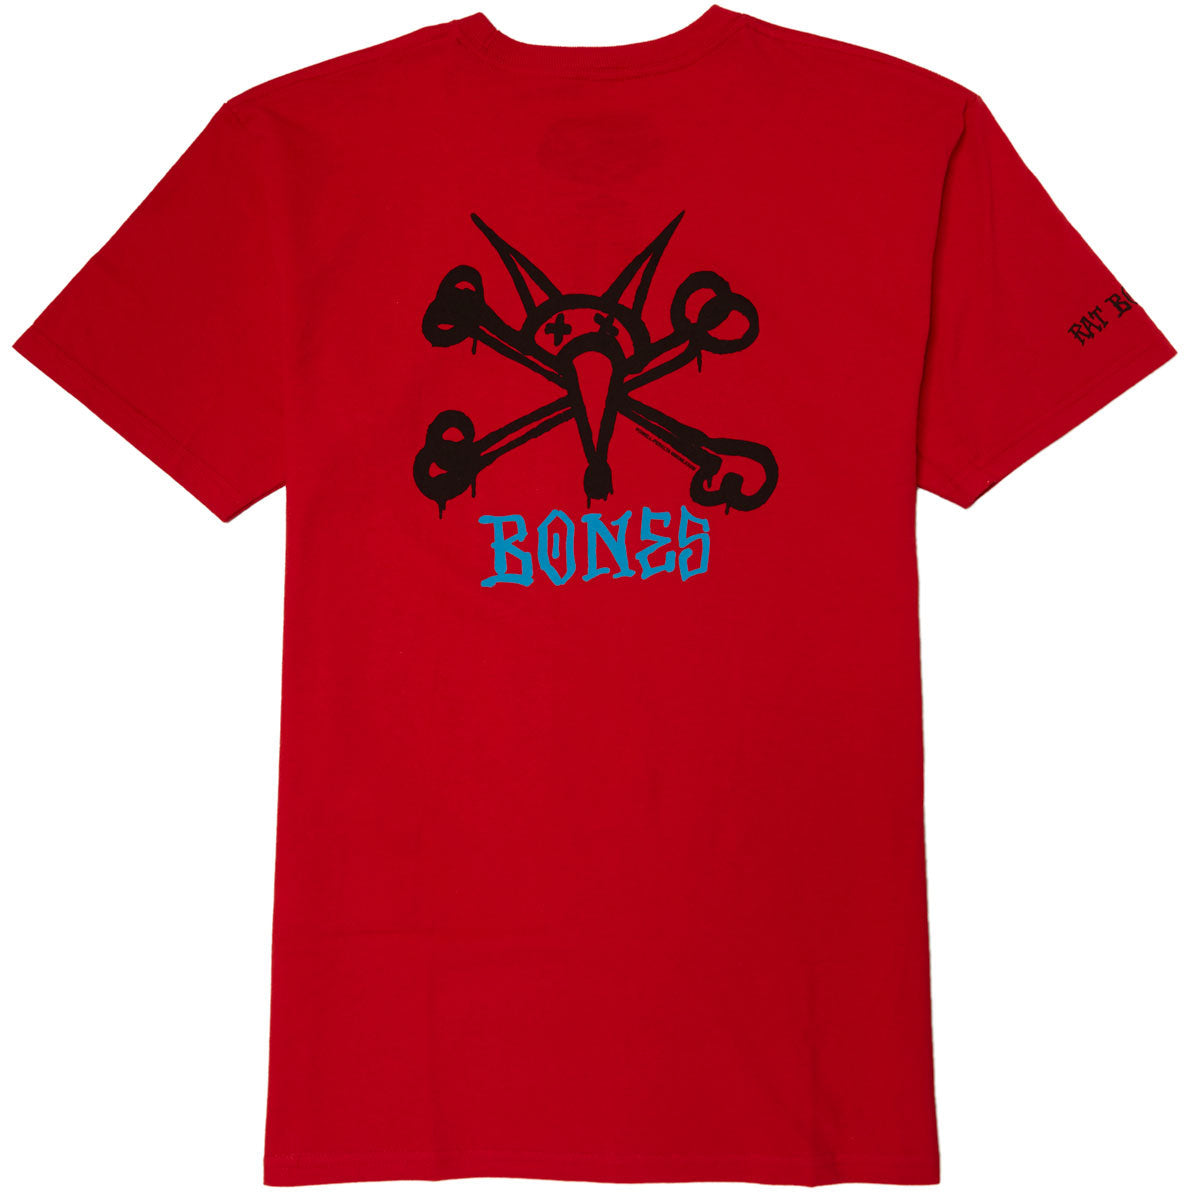 Powell-Peralta Rat Bones T-Shirt - Red image 3